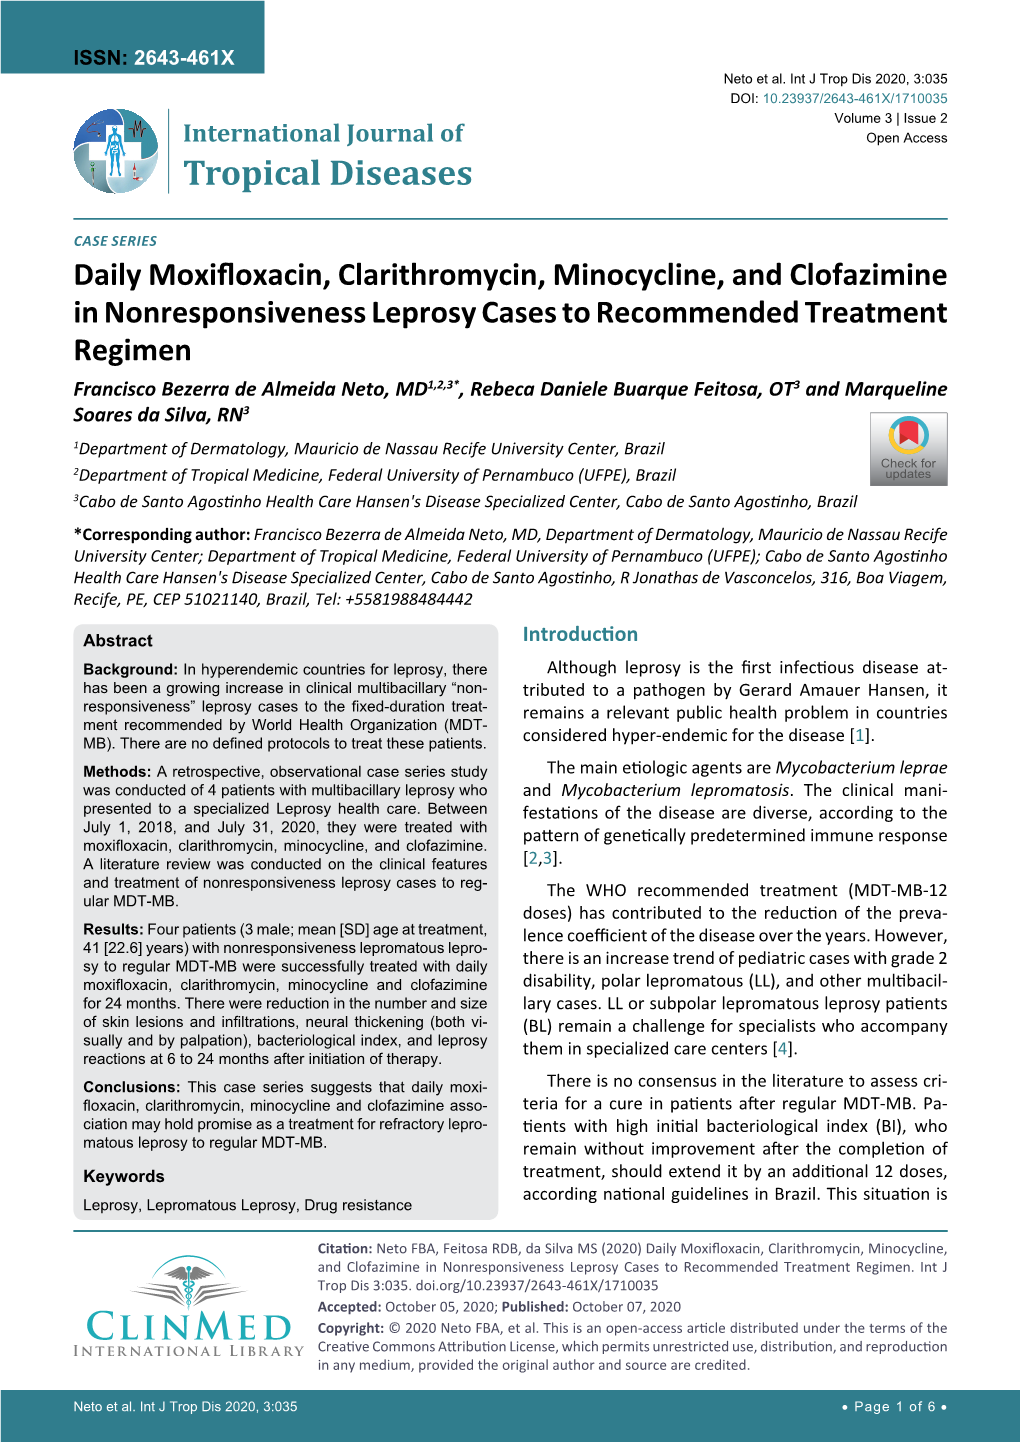 Daily Moxifloxacin, Clarithromycin, Minocycline, and Clofazimine In